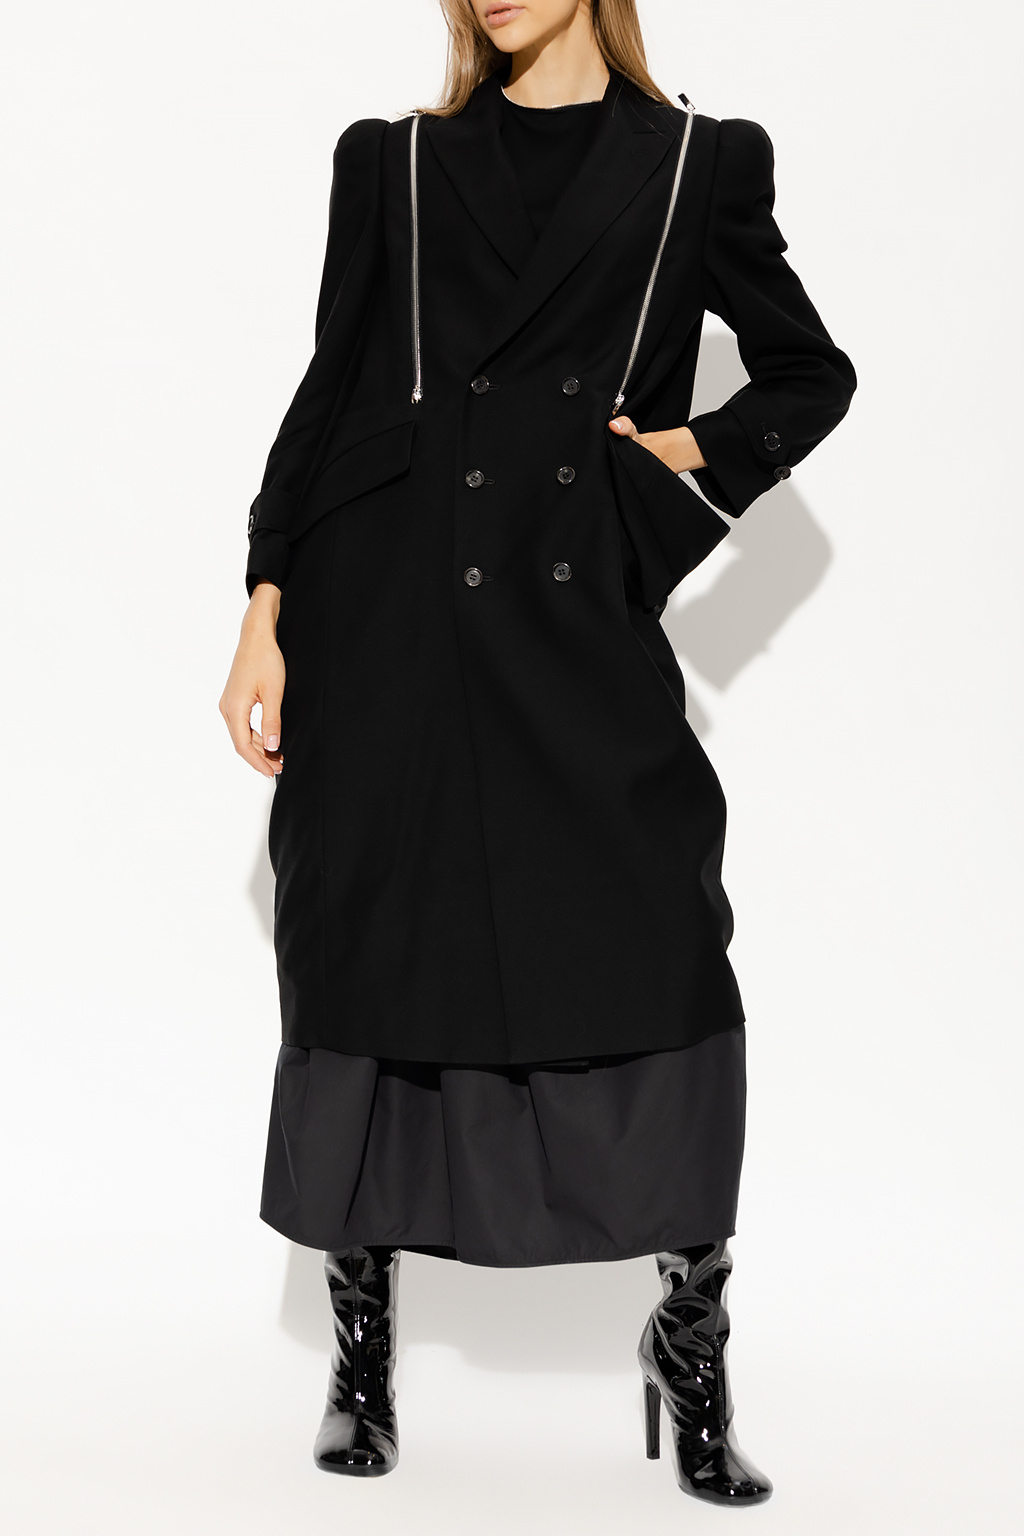 Comme des Garçons Noir Kei Ninomiya Top with decorative closure | Women ...